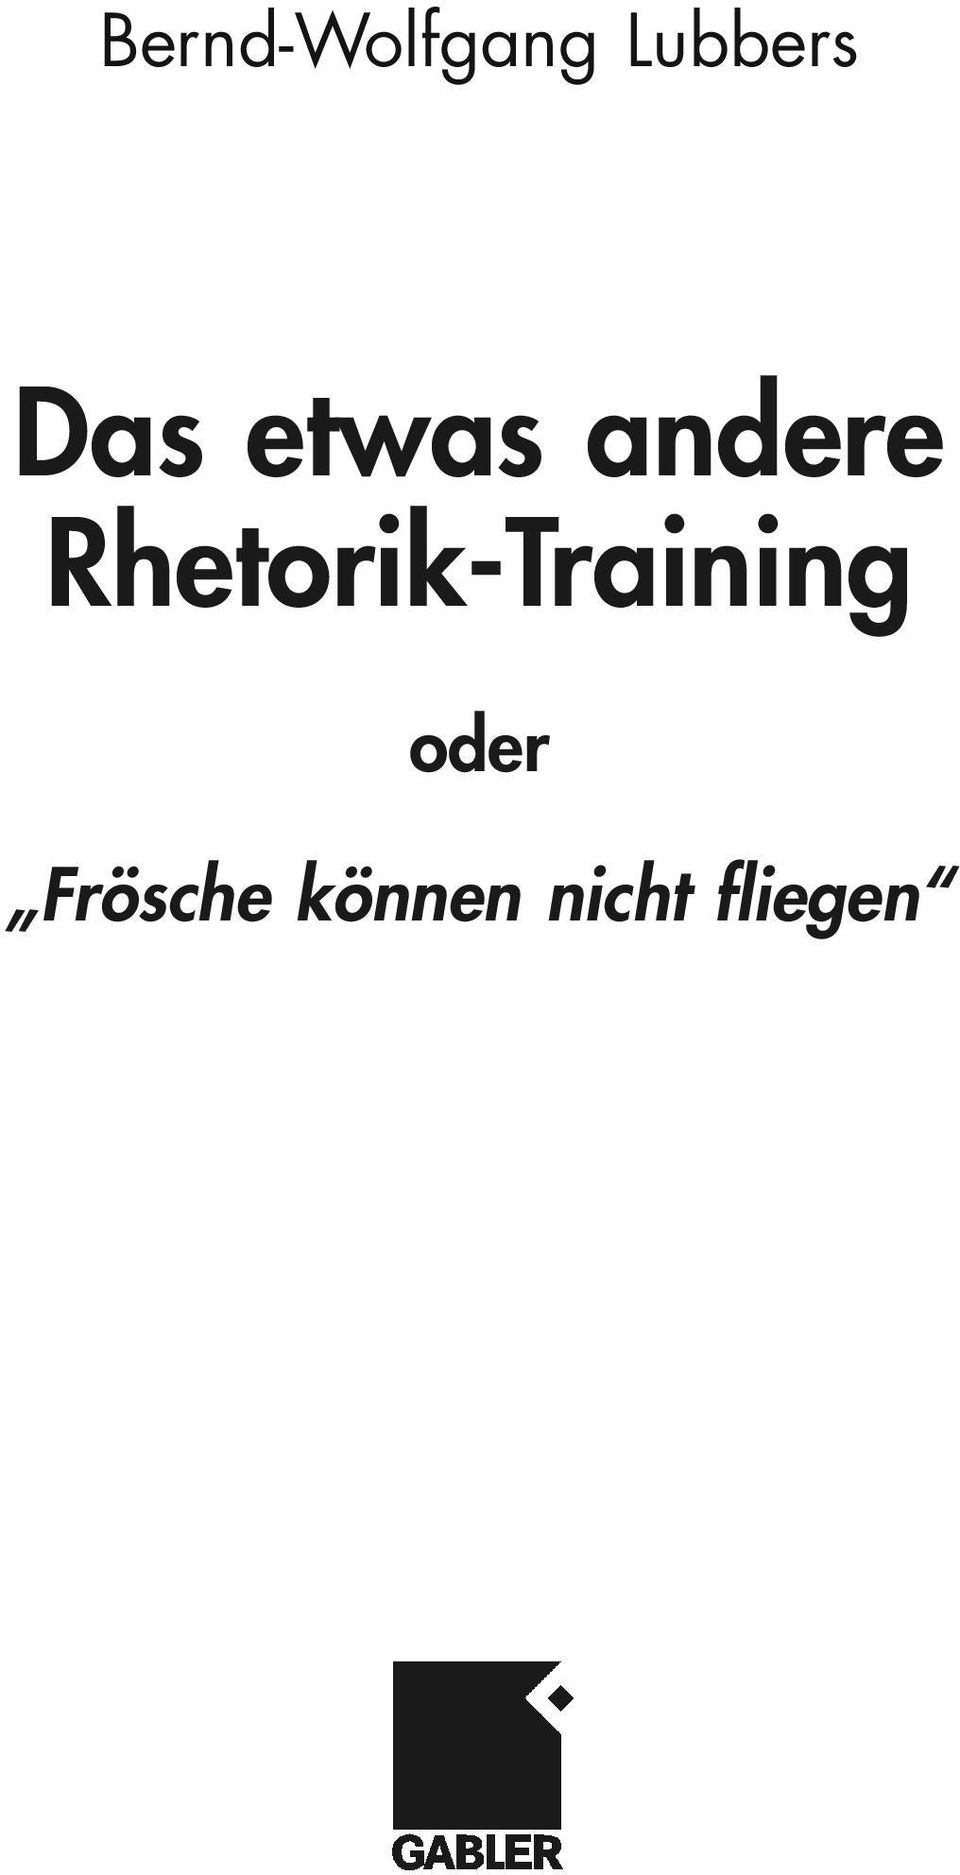 Rhetorik-Training oder